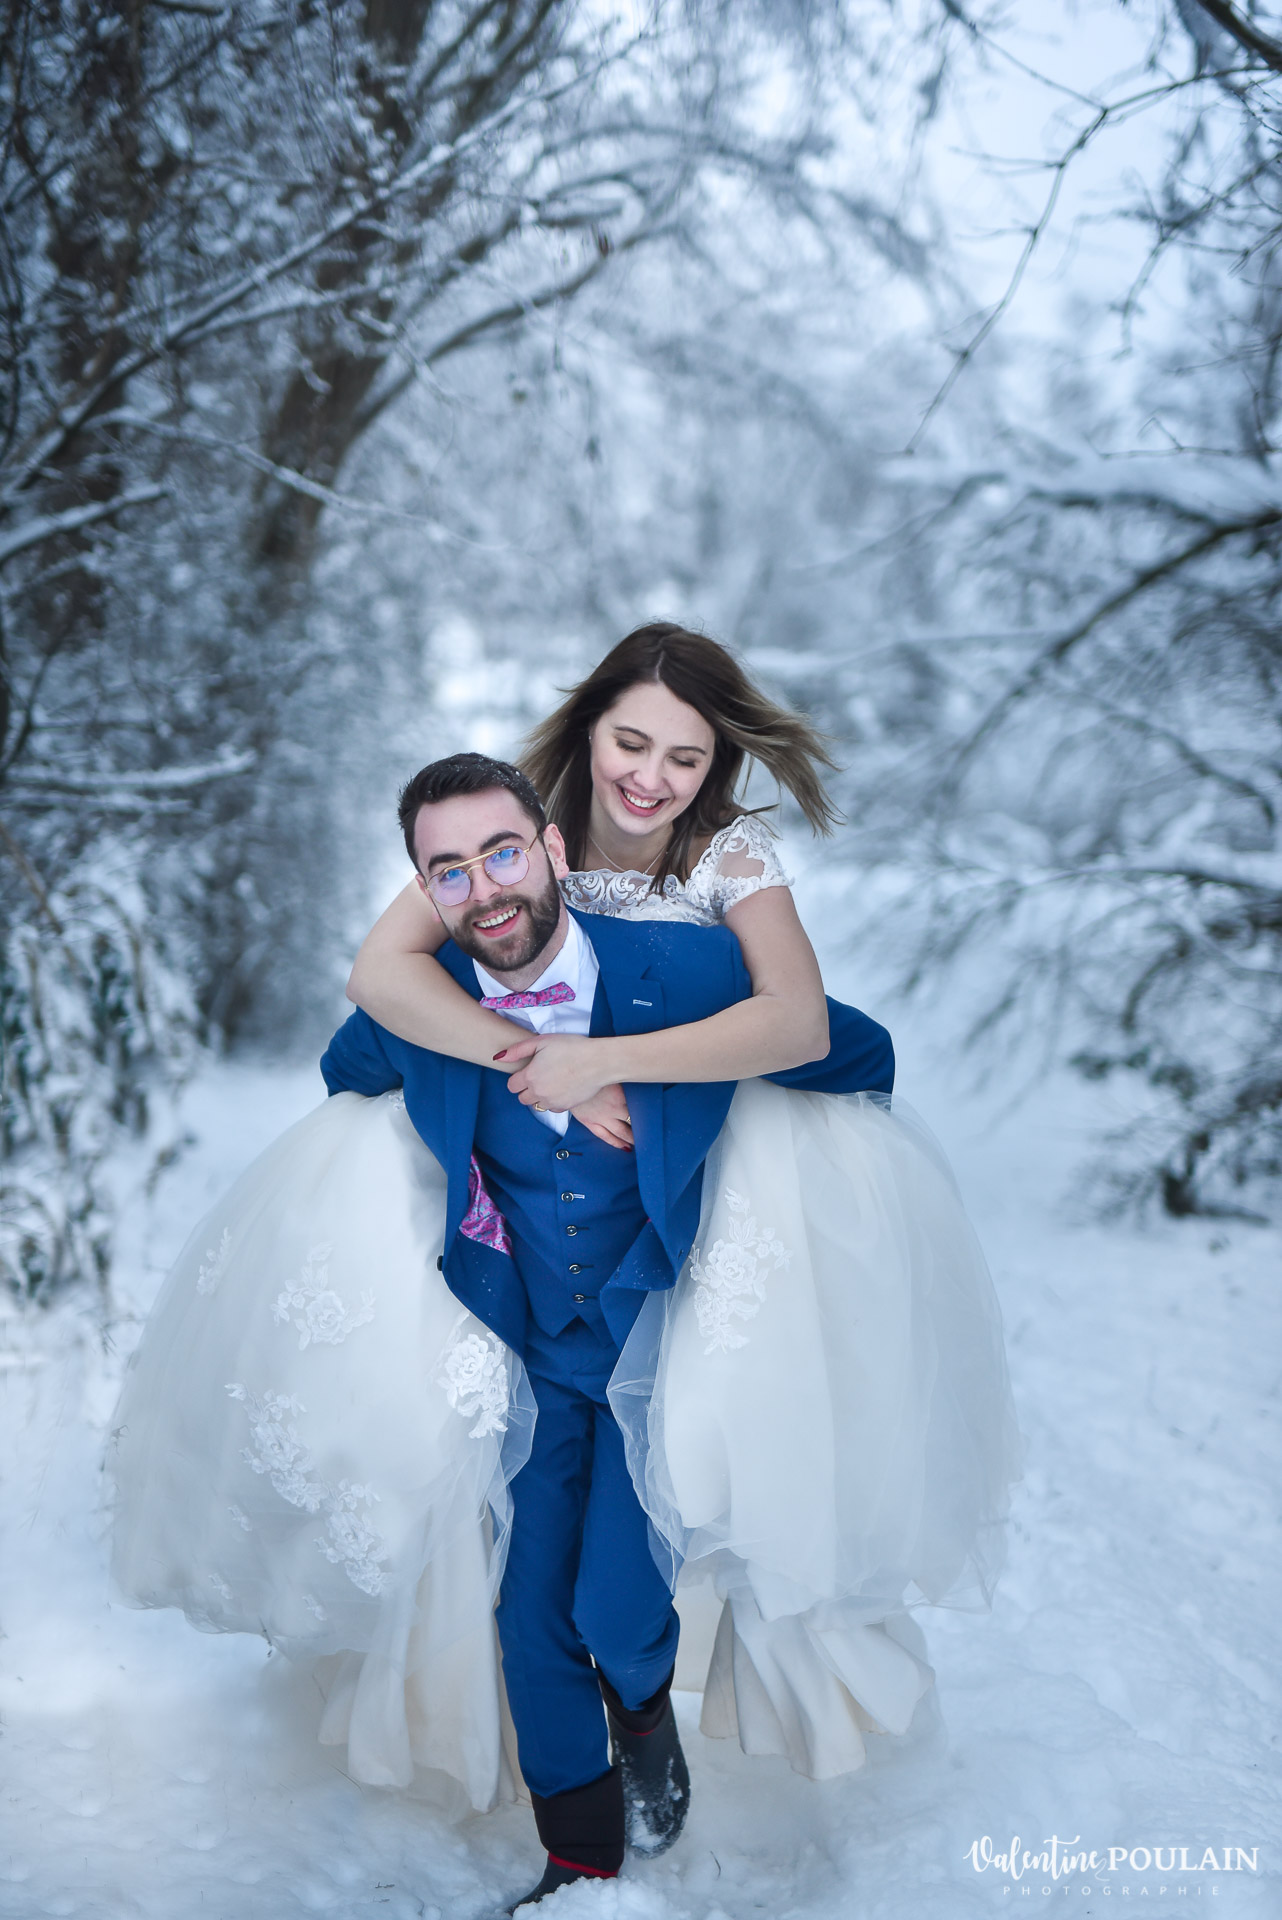 Photo mariage neige hiver - Valentine Poulain folie